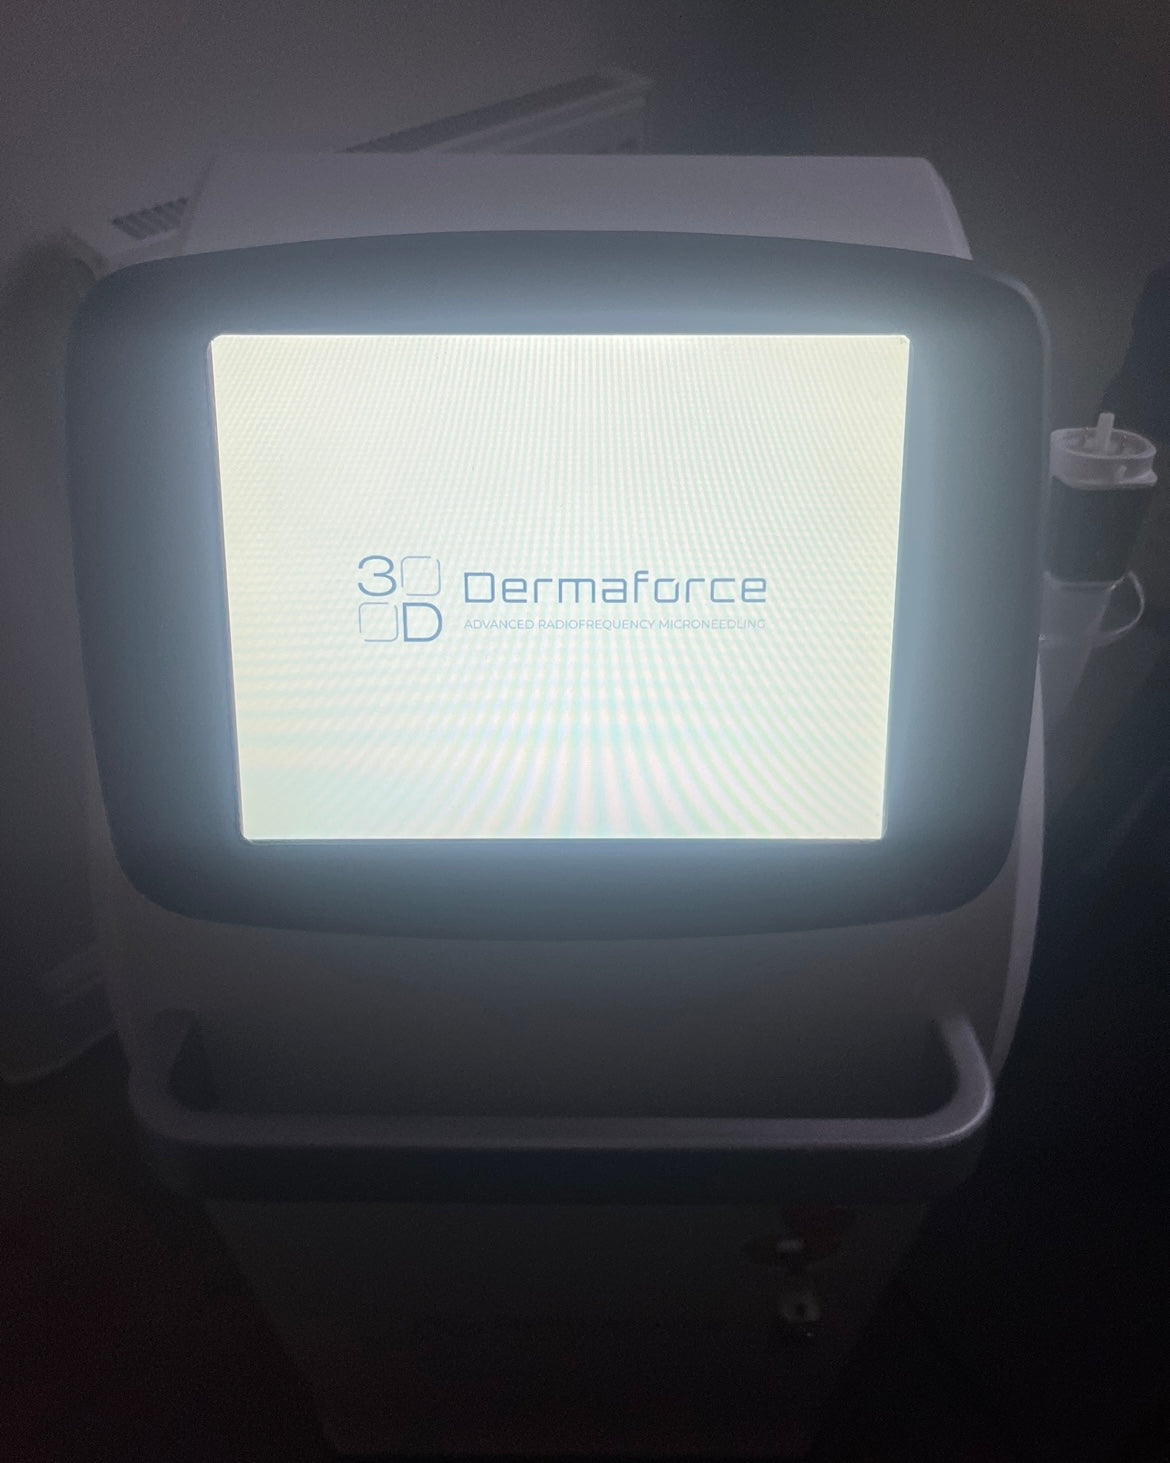 Dermaforce 3d radio frequency microneedling